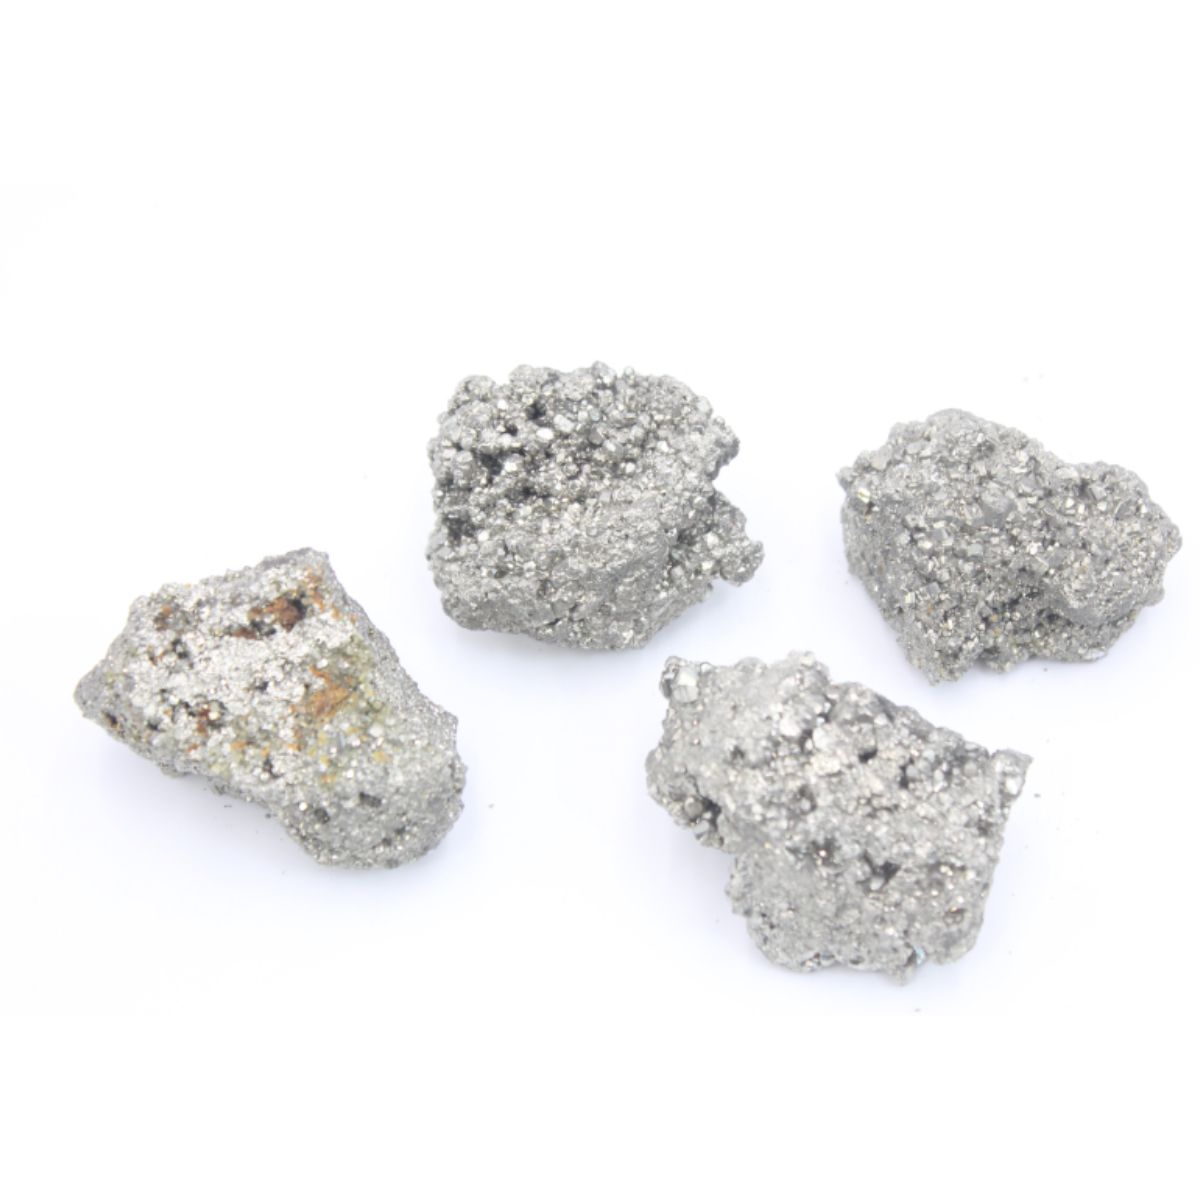 Pyrite Mineral Stone 120-225g